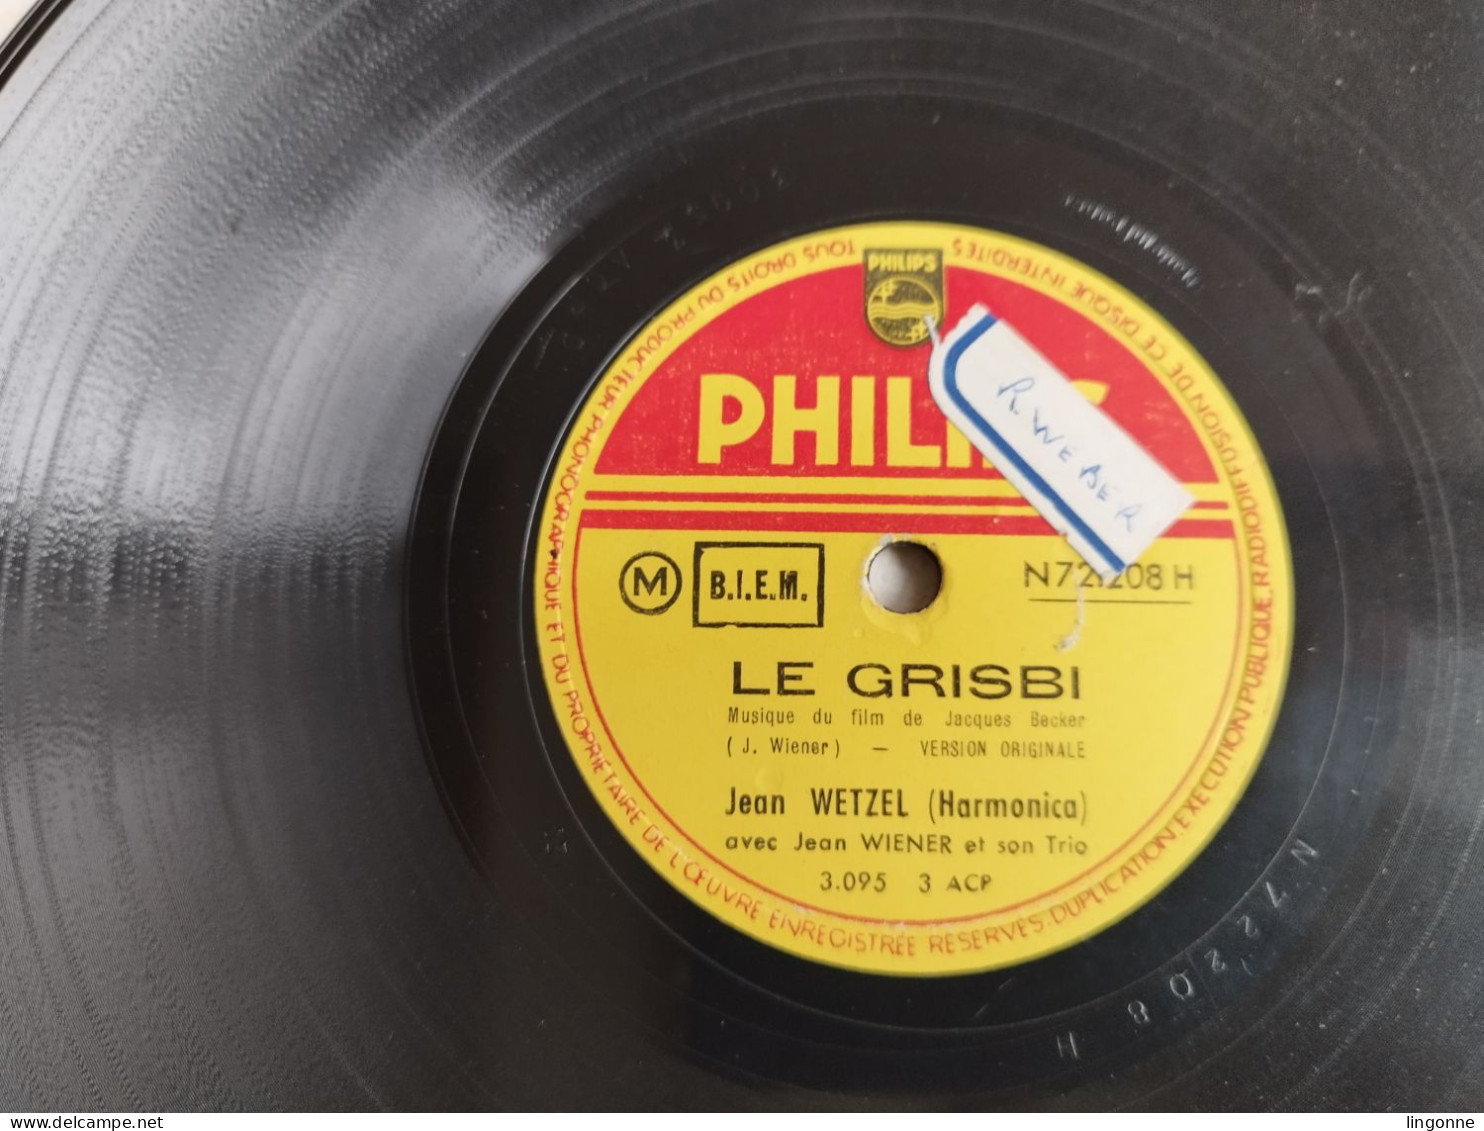 78 TOURS 250 Mm Jean Wetzel – Grisbi Blues / Le Grisbi 	Philips – N 72.208 H - Special Formats